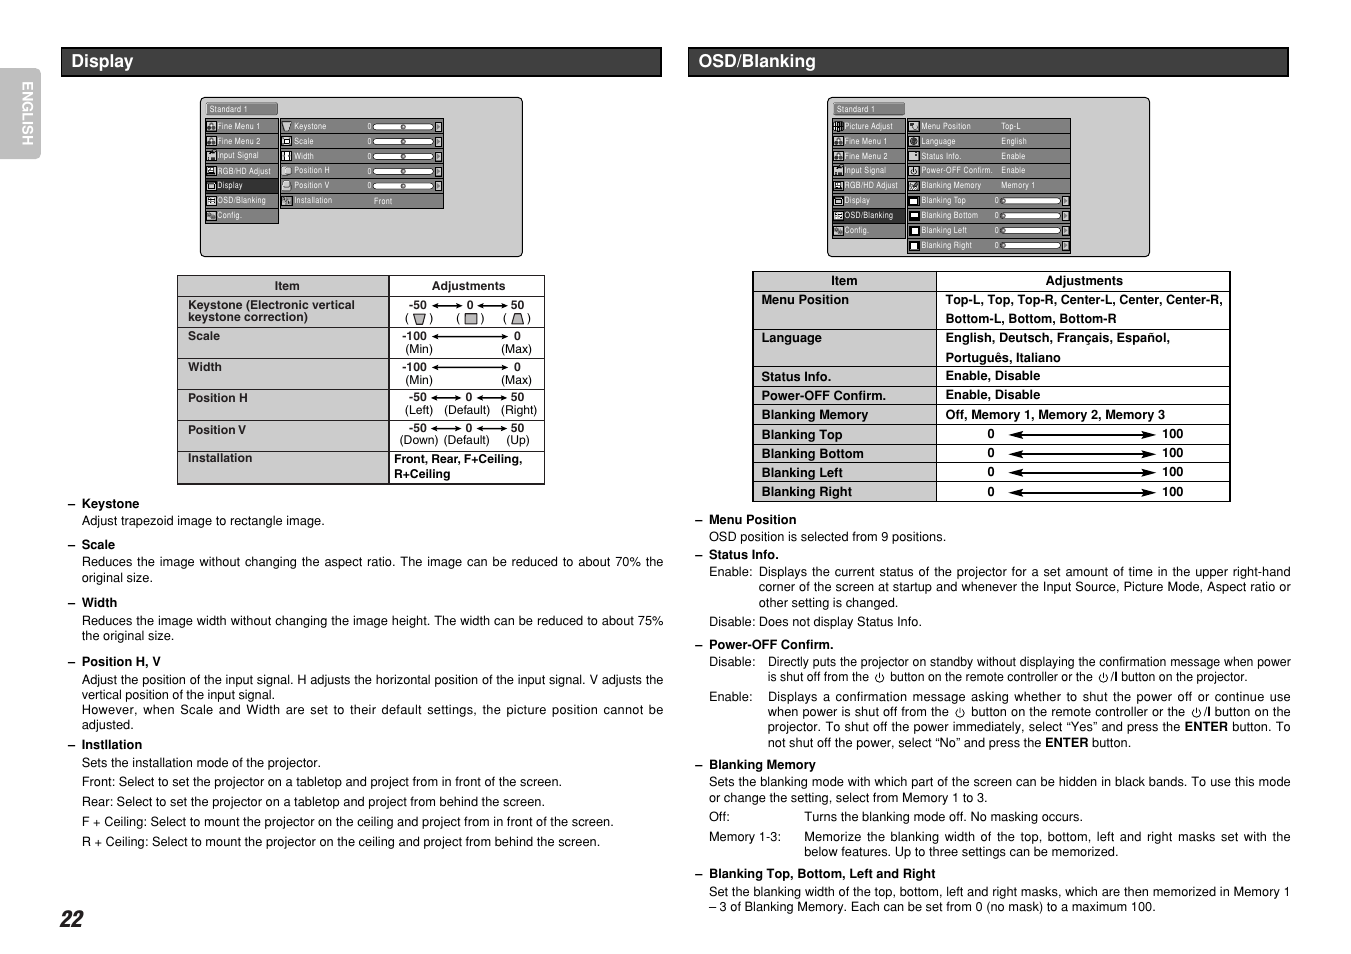 Display, Osd/blanking | Marantz VP-12S4 User Manual | Page 28 / 37